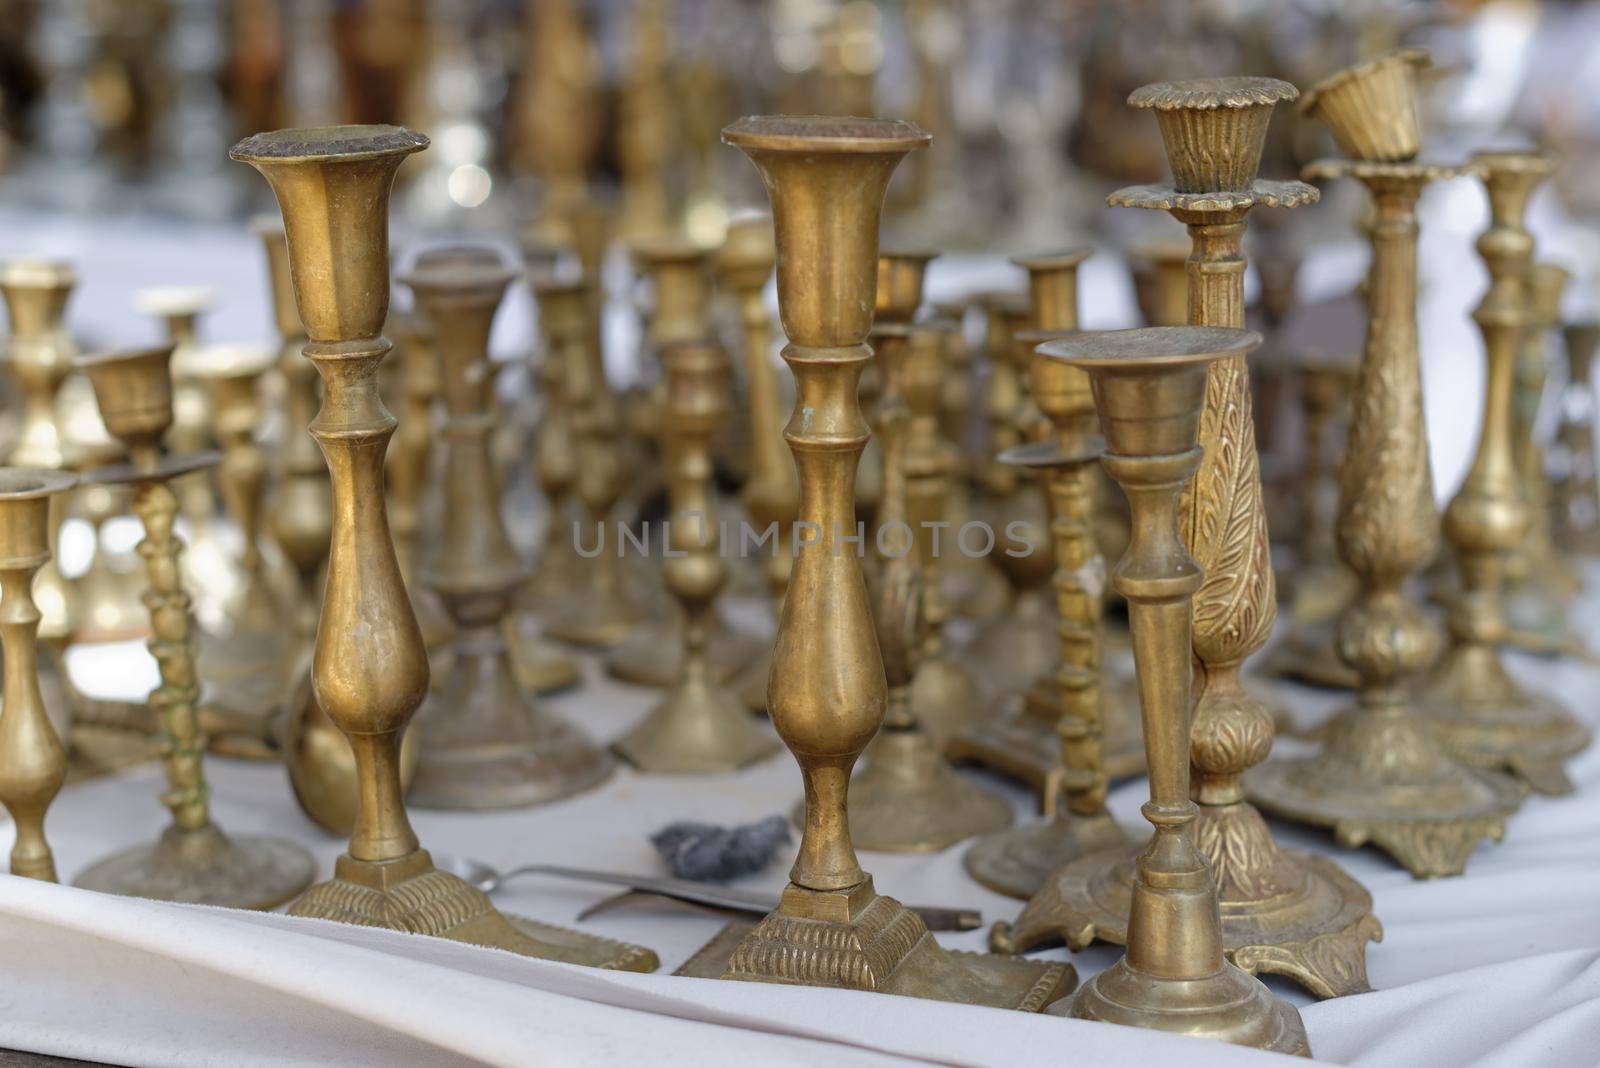 Vintage brass candlesticks at a flea market